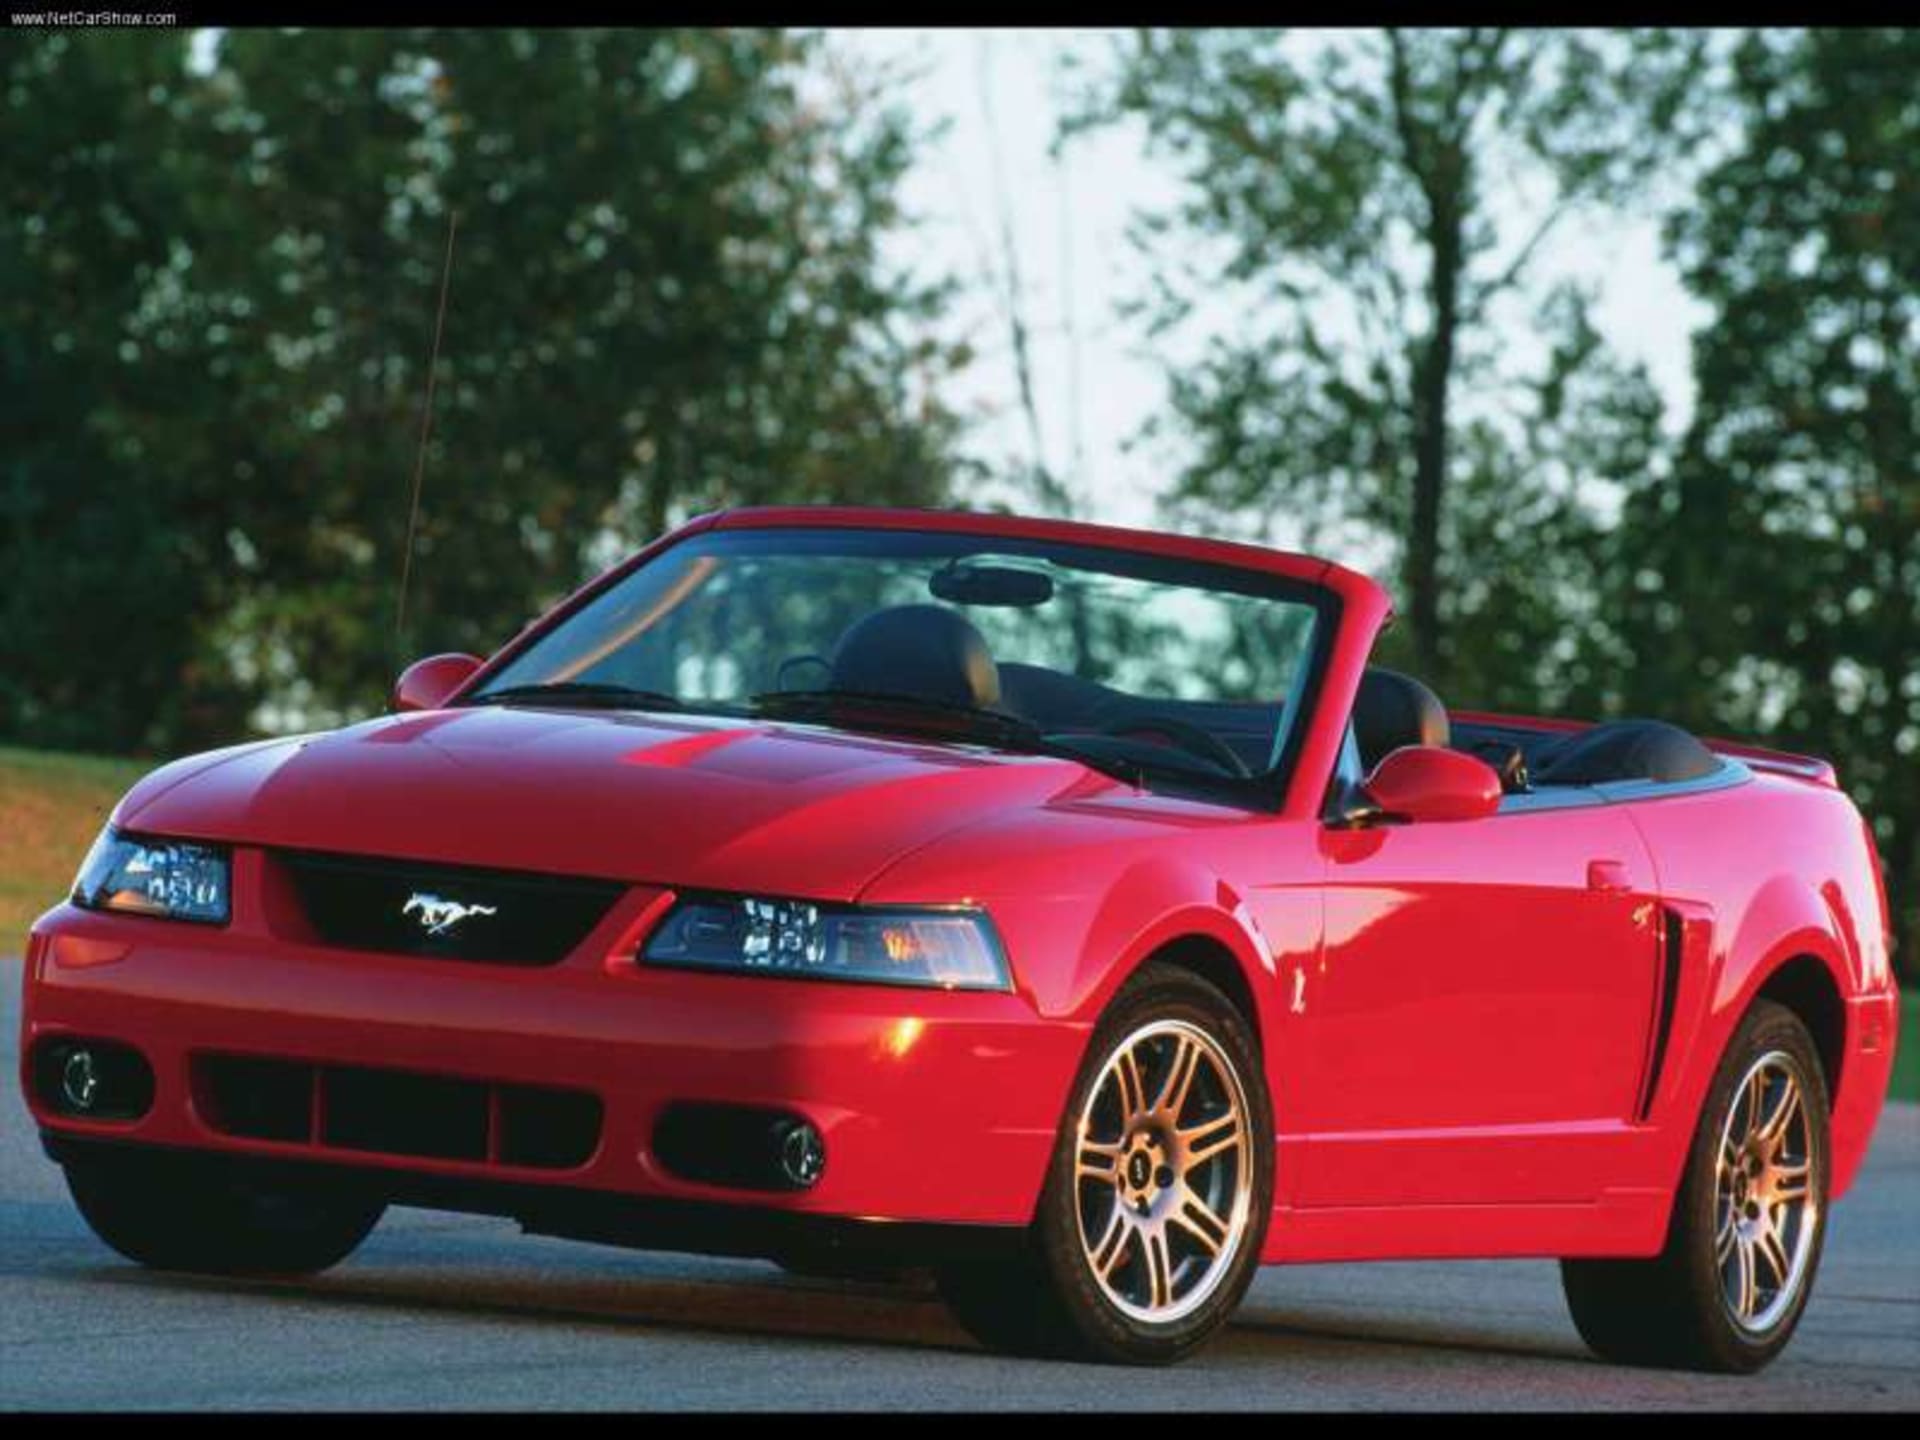 Ford Mustang - SVT Cobra Convertible (1999)